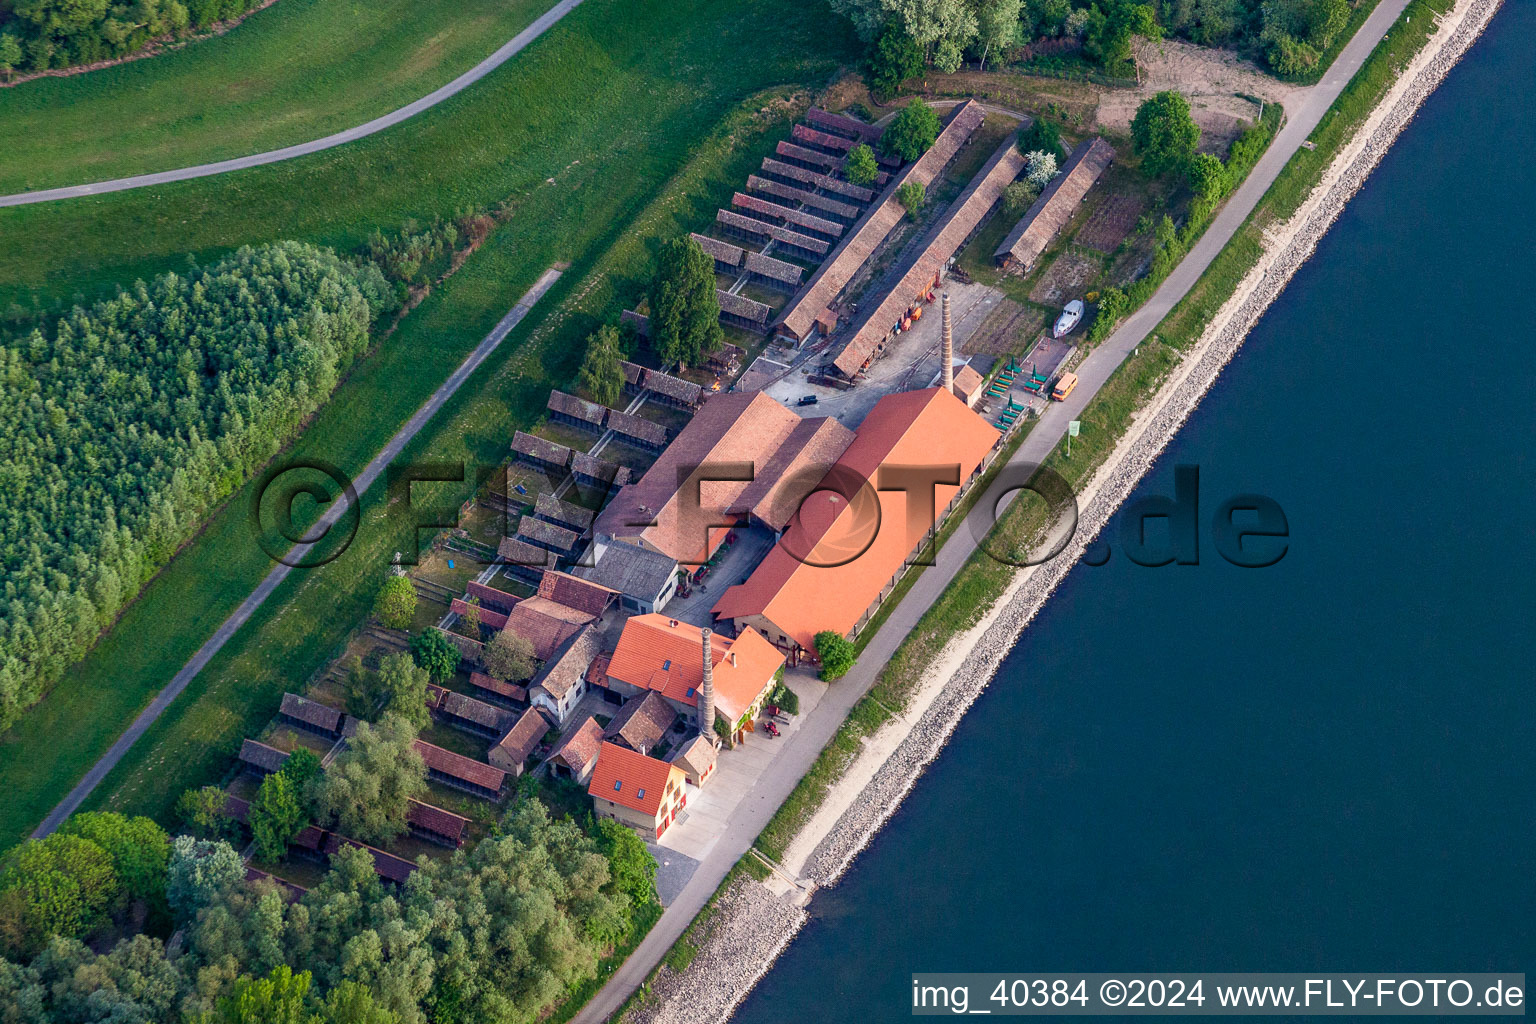 Aerial view of Museum building ensemble Ziegeleimuseum Sondernheim in Germersheim in the state Rhineland-Palatinate, Germany